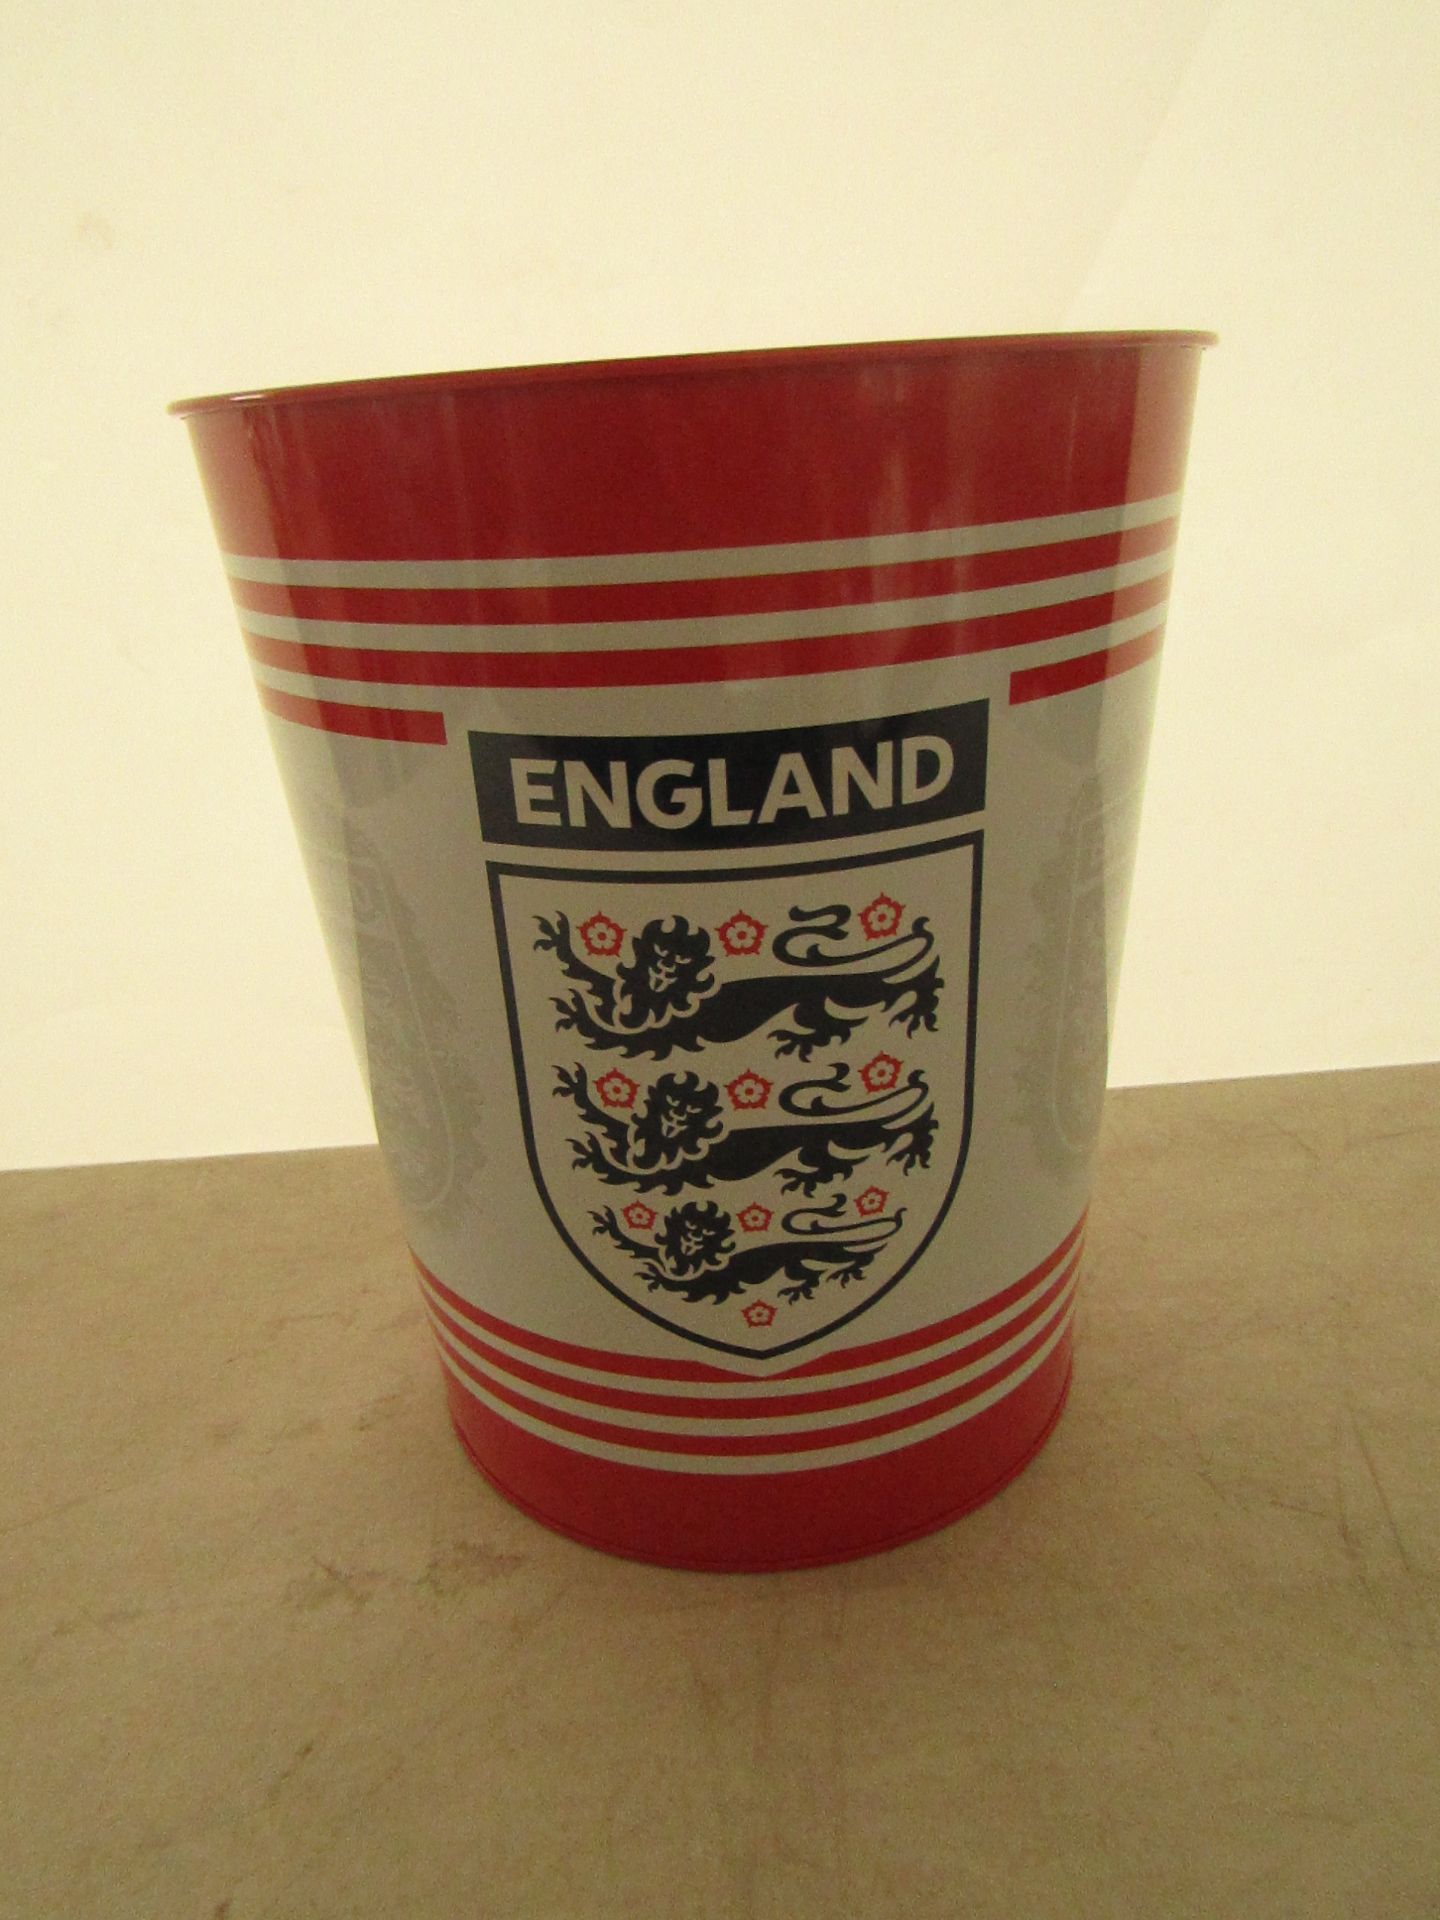 England metal bin, no box.